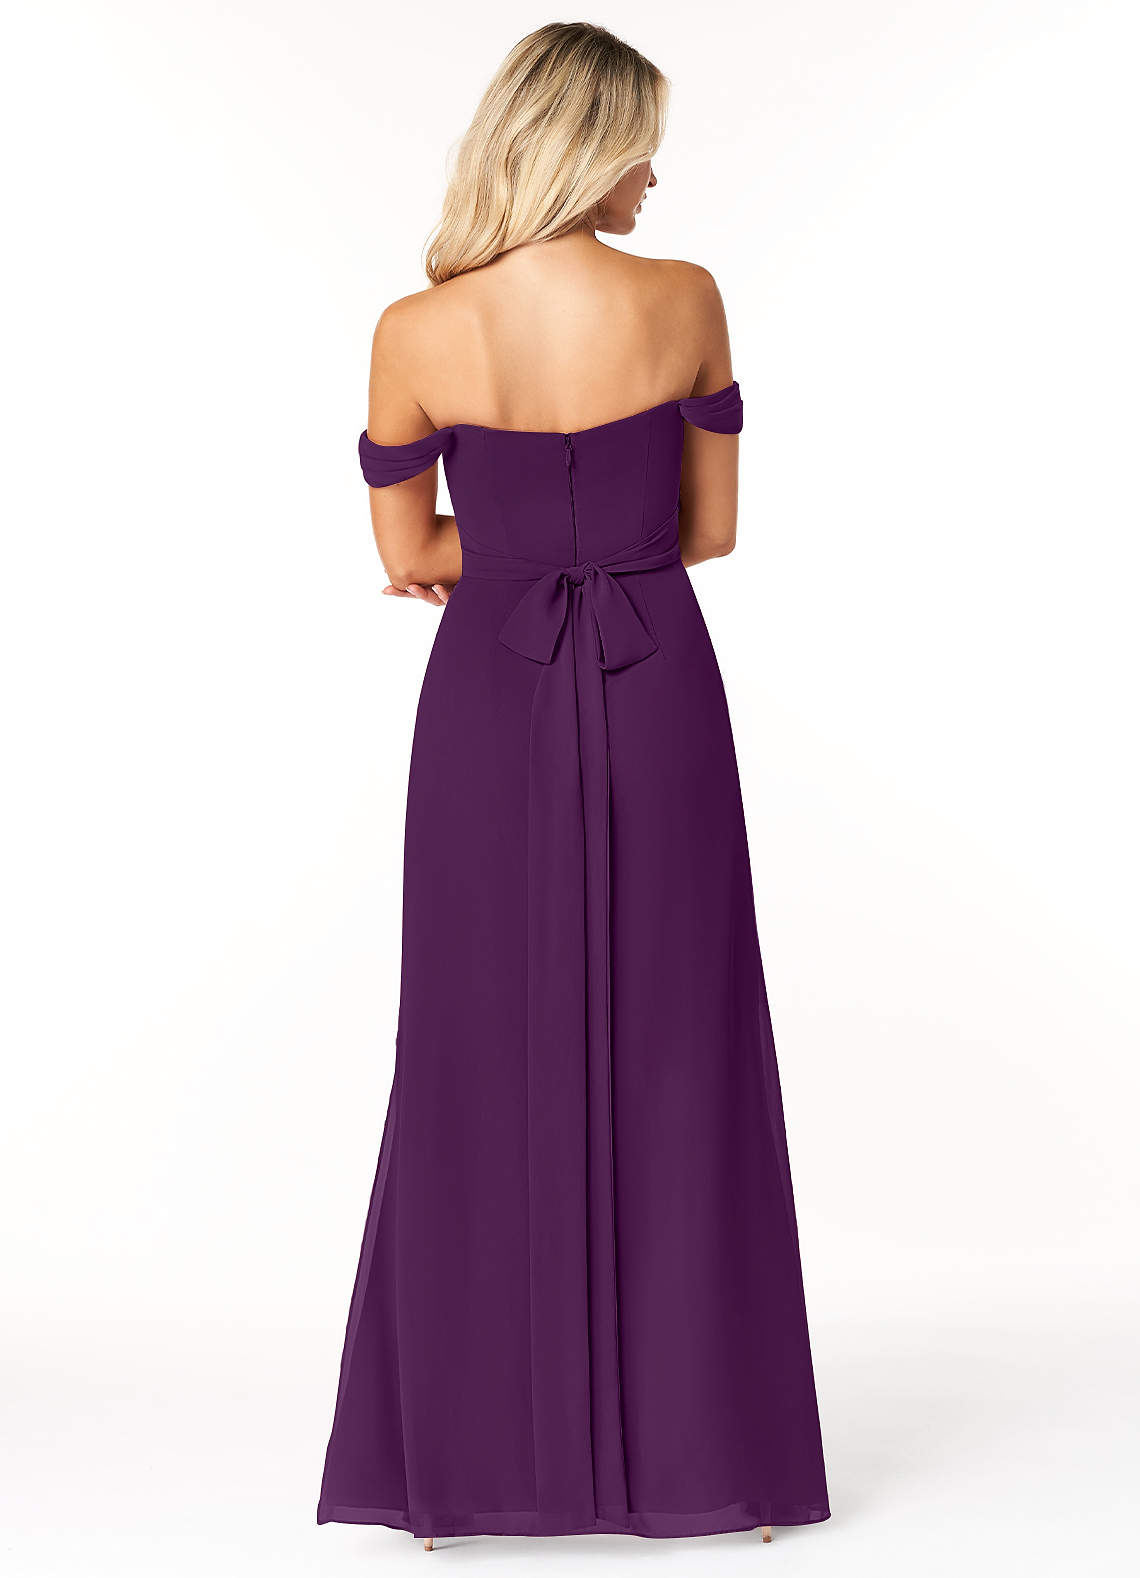 Azazie Joretta Bridesmaid Dresses A-Line Sweetheart Neckline Chiffon Floor-Length Dress image1